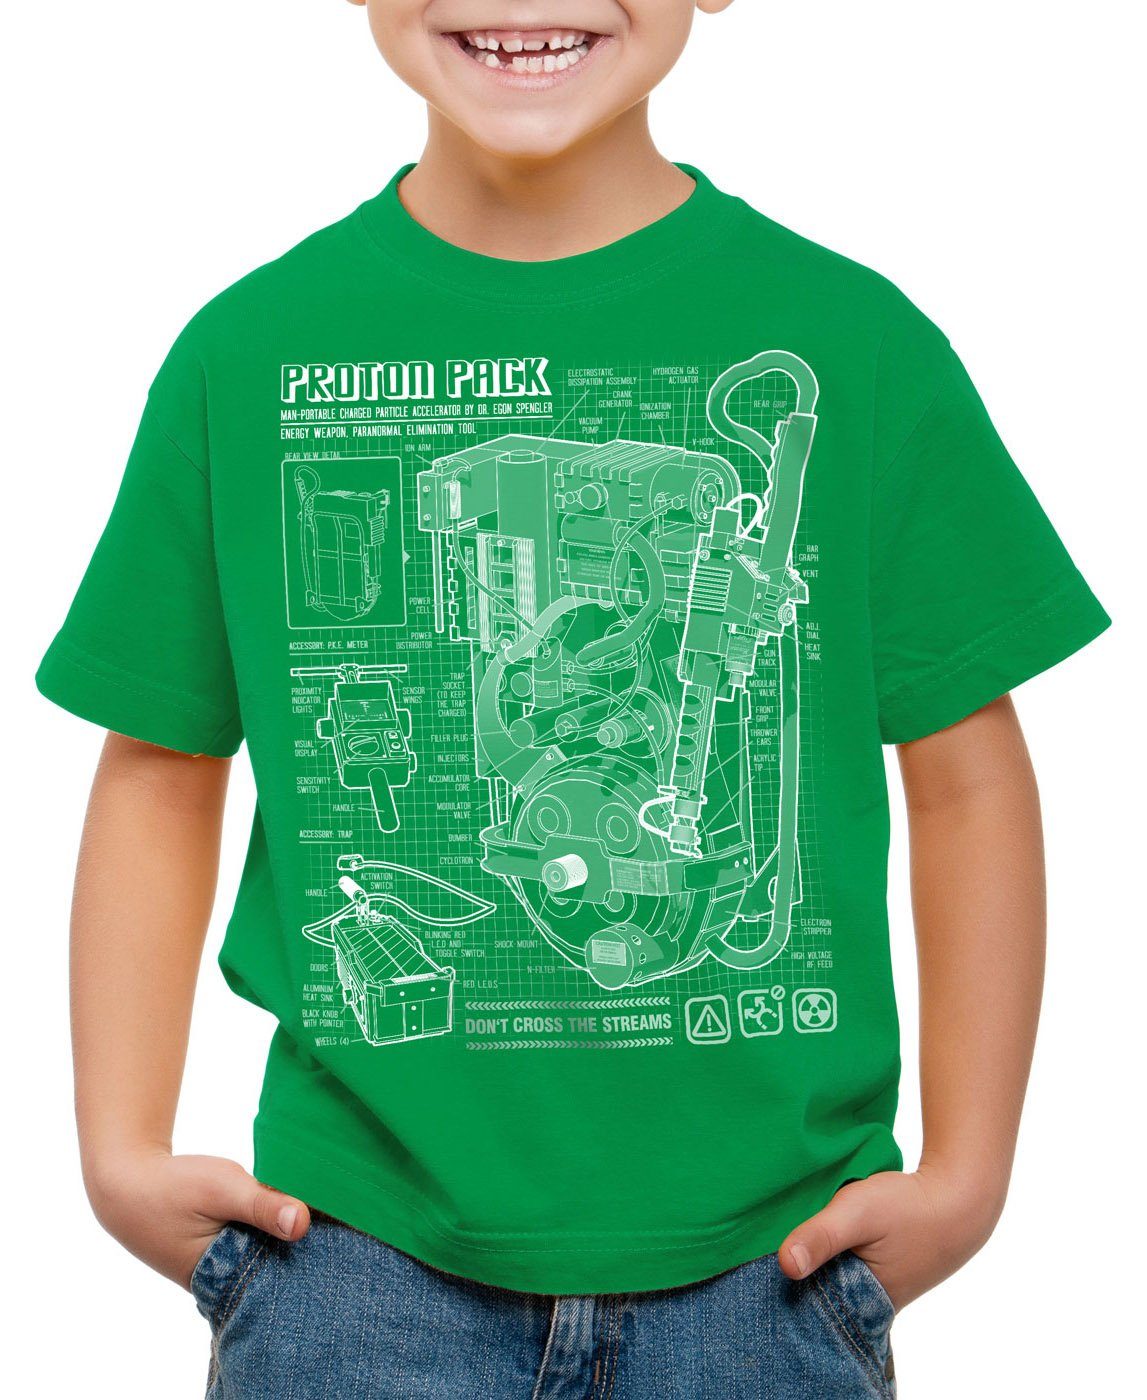 Print-Shirt T-Shirt grün proton Kinder style3 Blaupause pack Protonenstrahler Geisterjäger